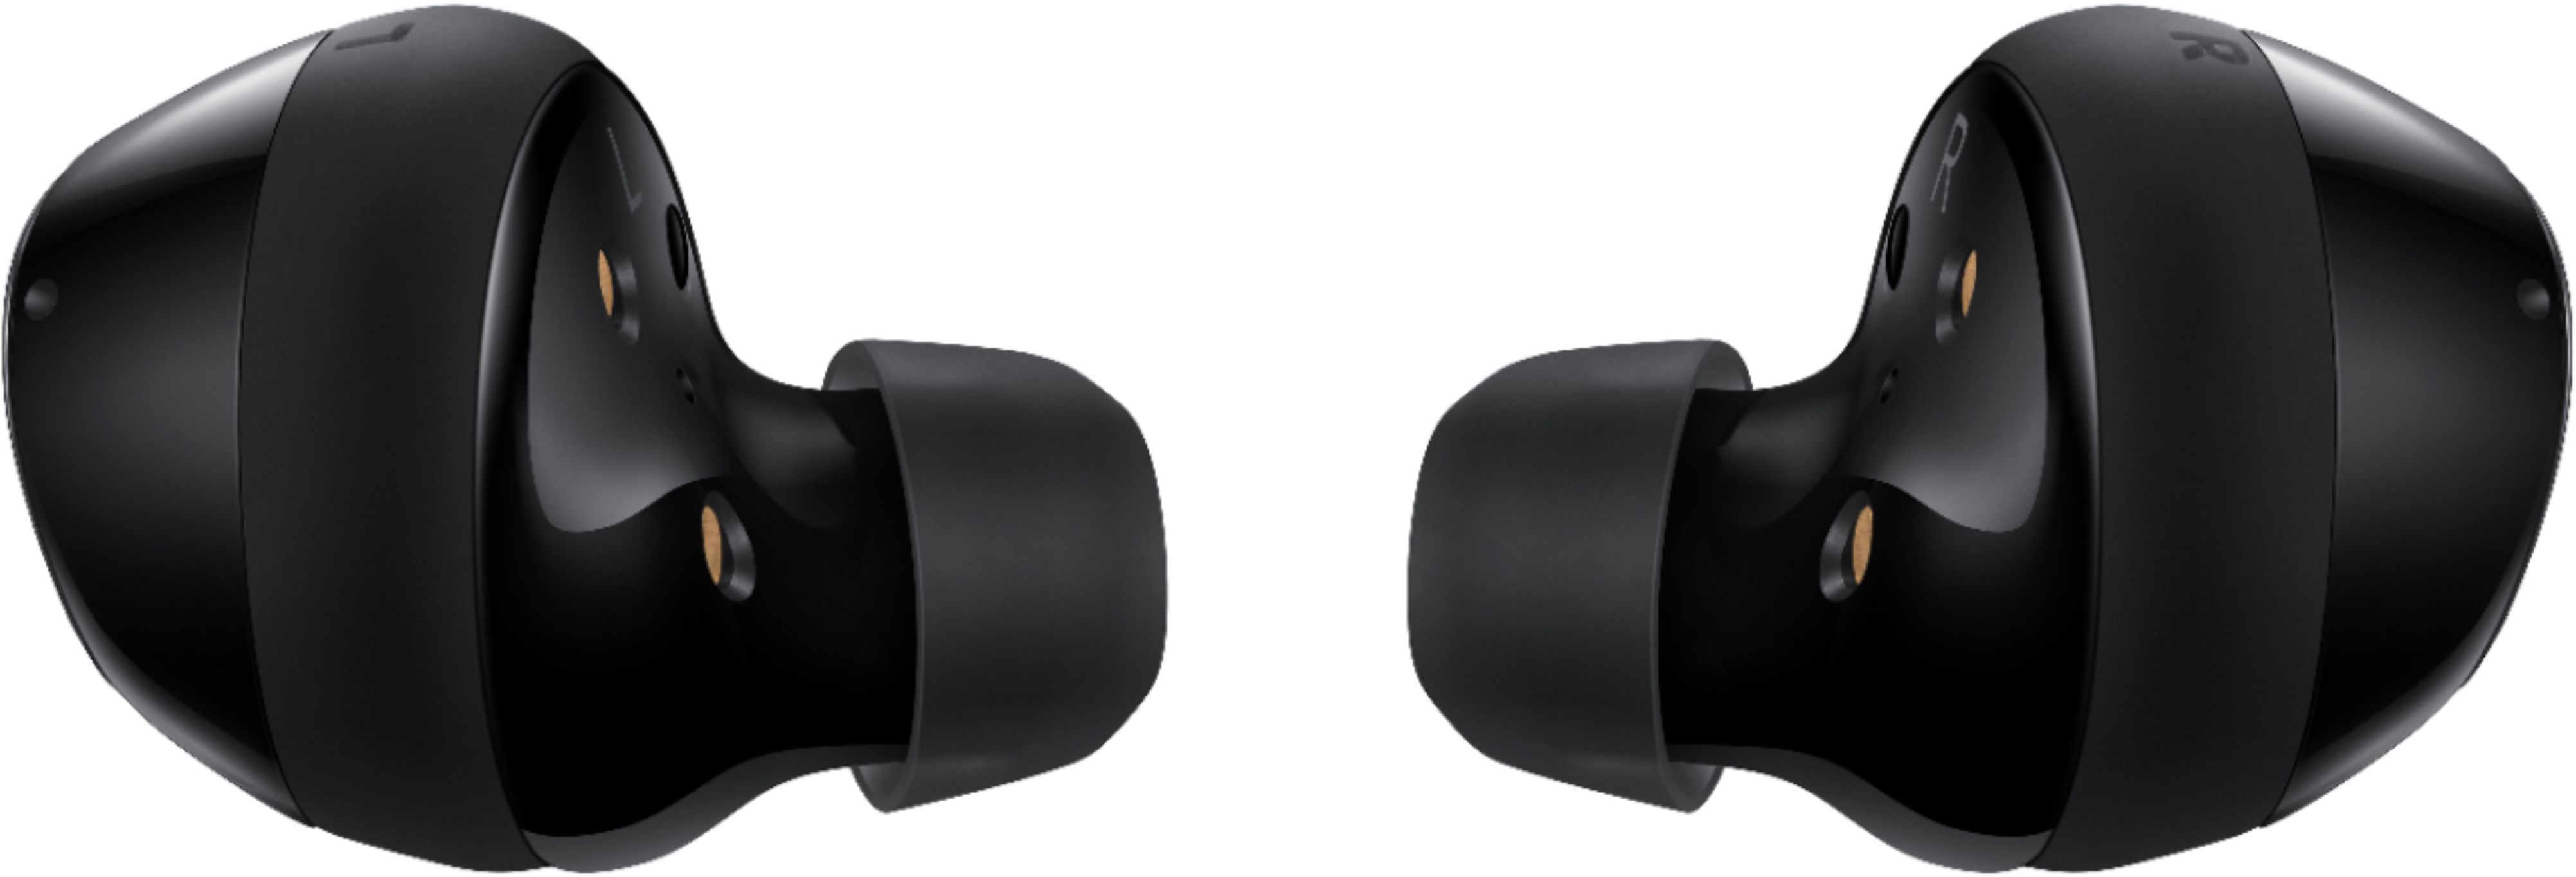 Galaxy Buds 2 SM-R177NZKAXAR Earbud Noise-Cancelling Bluetooth Earphones -  Black